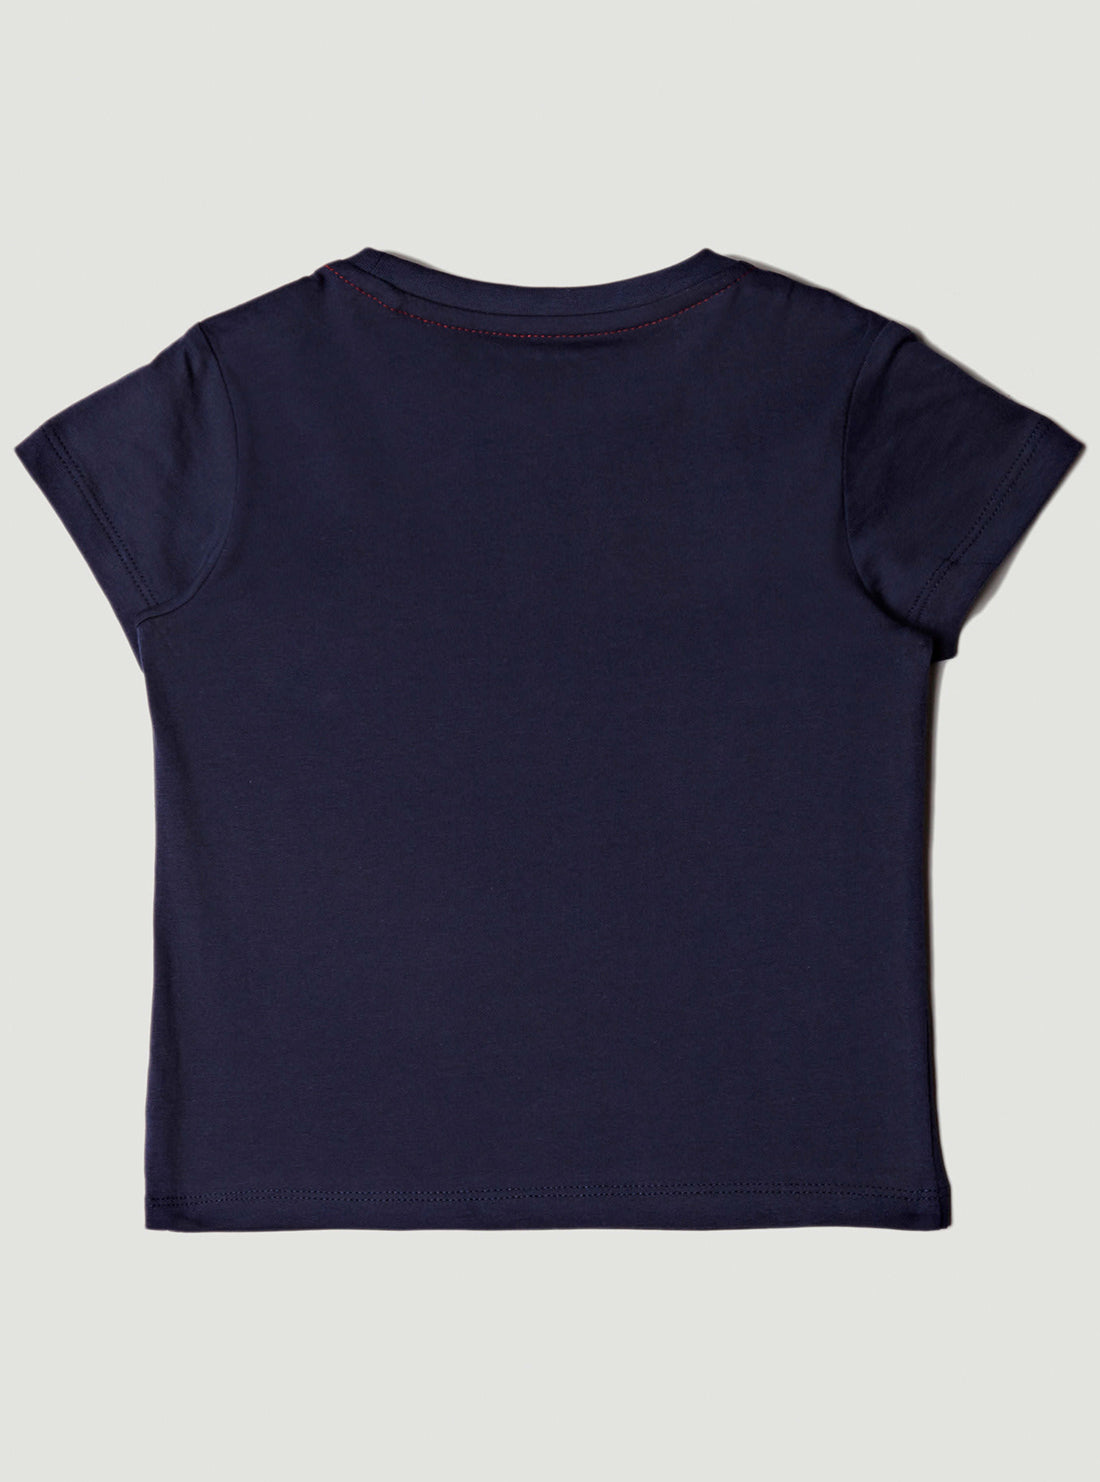 GUESS Little Boys Navy Blue Logo Short Sleeve T-Shirt (2-7)  N73I55K8HM0 Back View